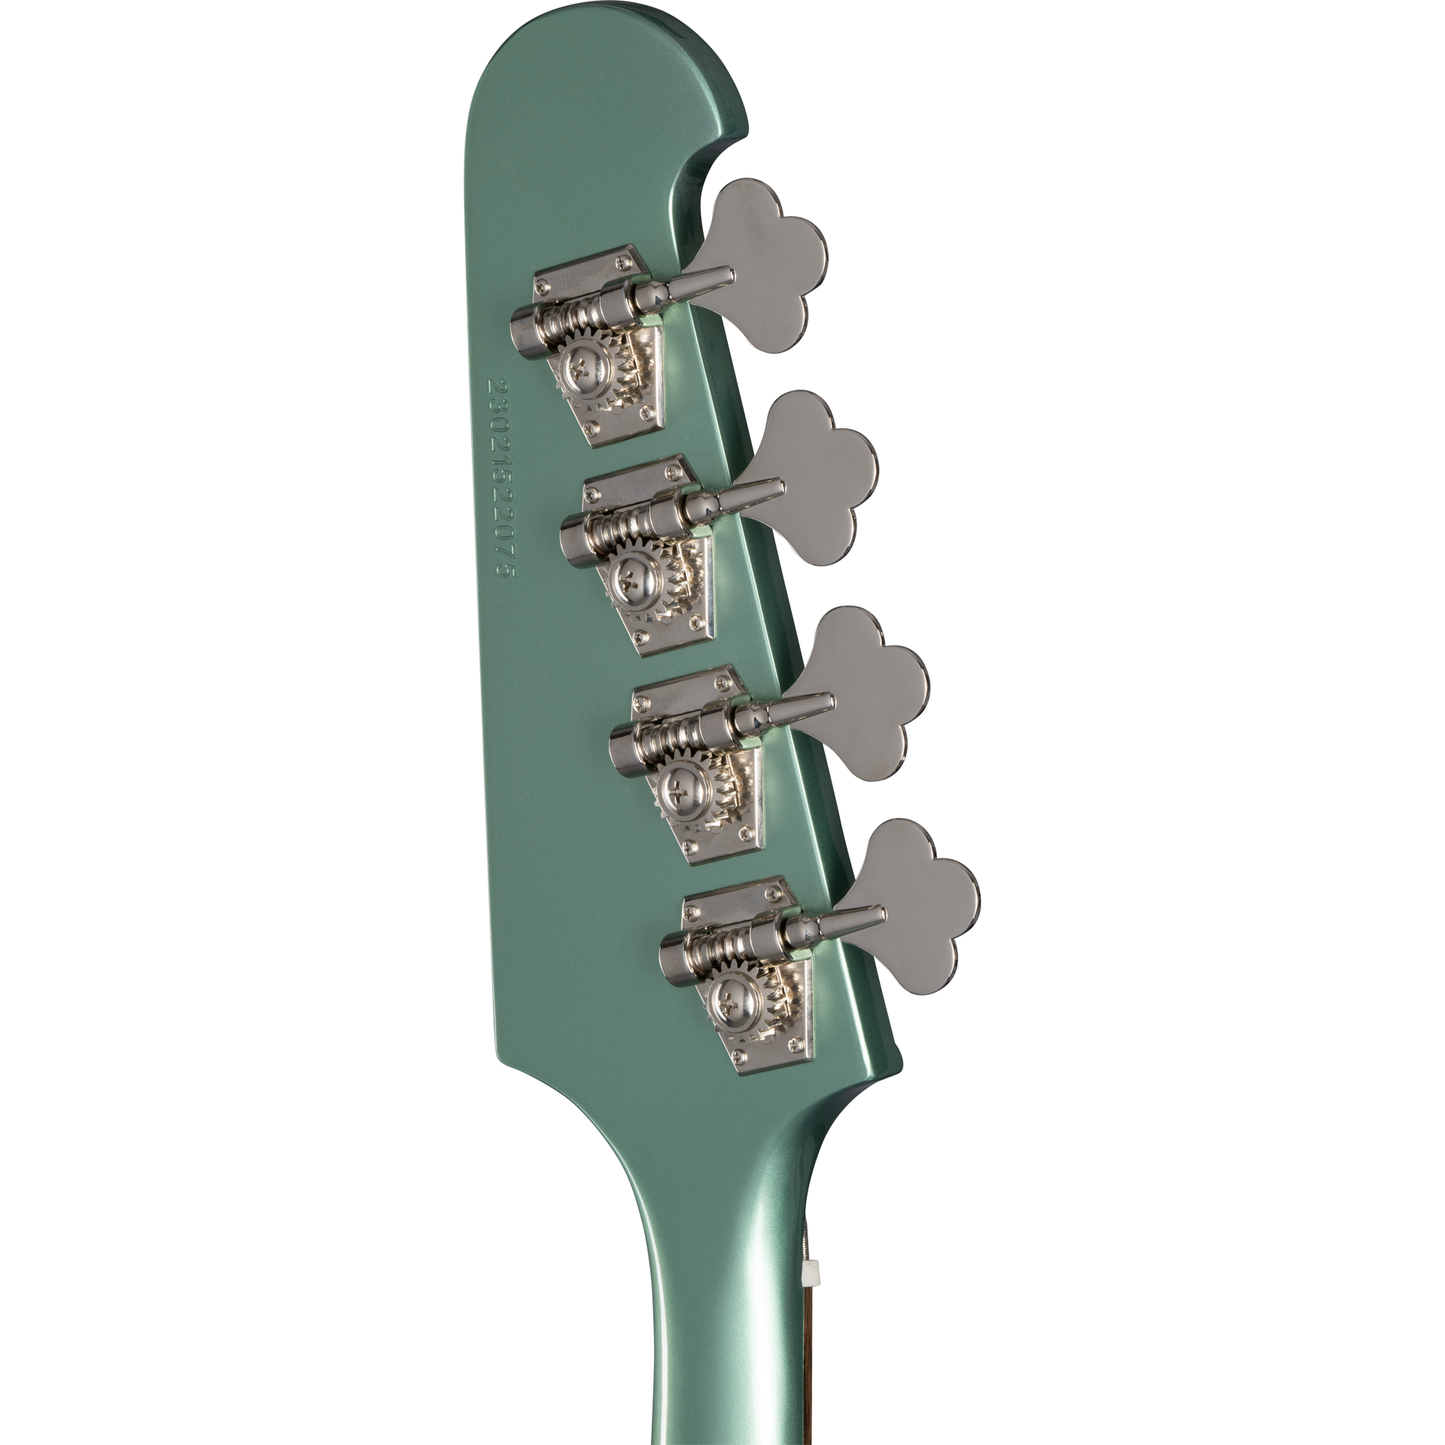 Epiphone Thunderbird '64 Electric Bass Guitar - Inverness Green